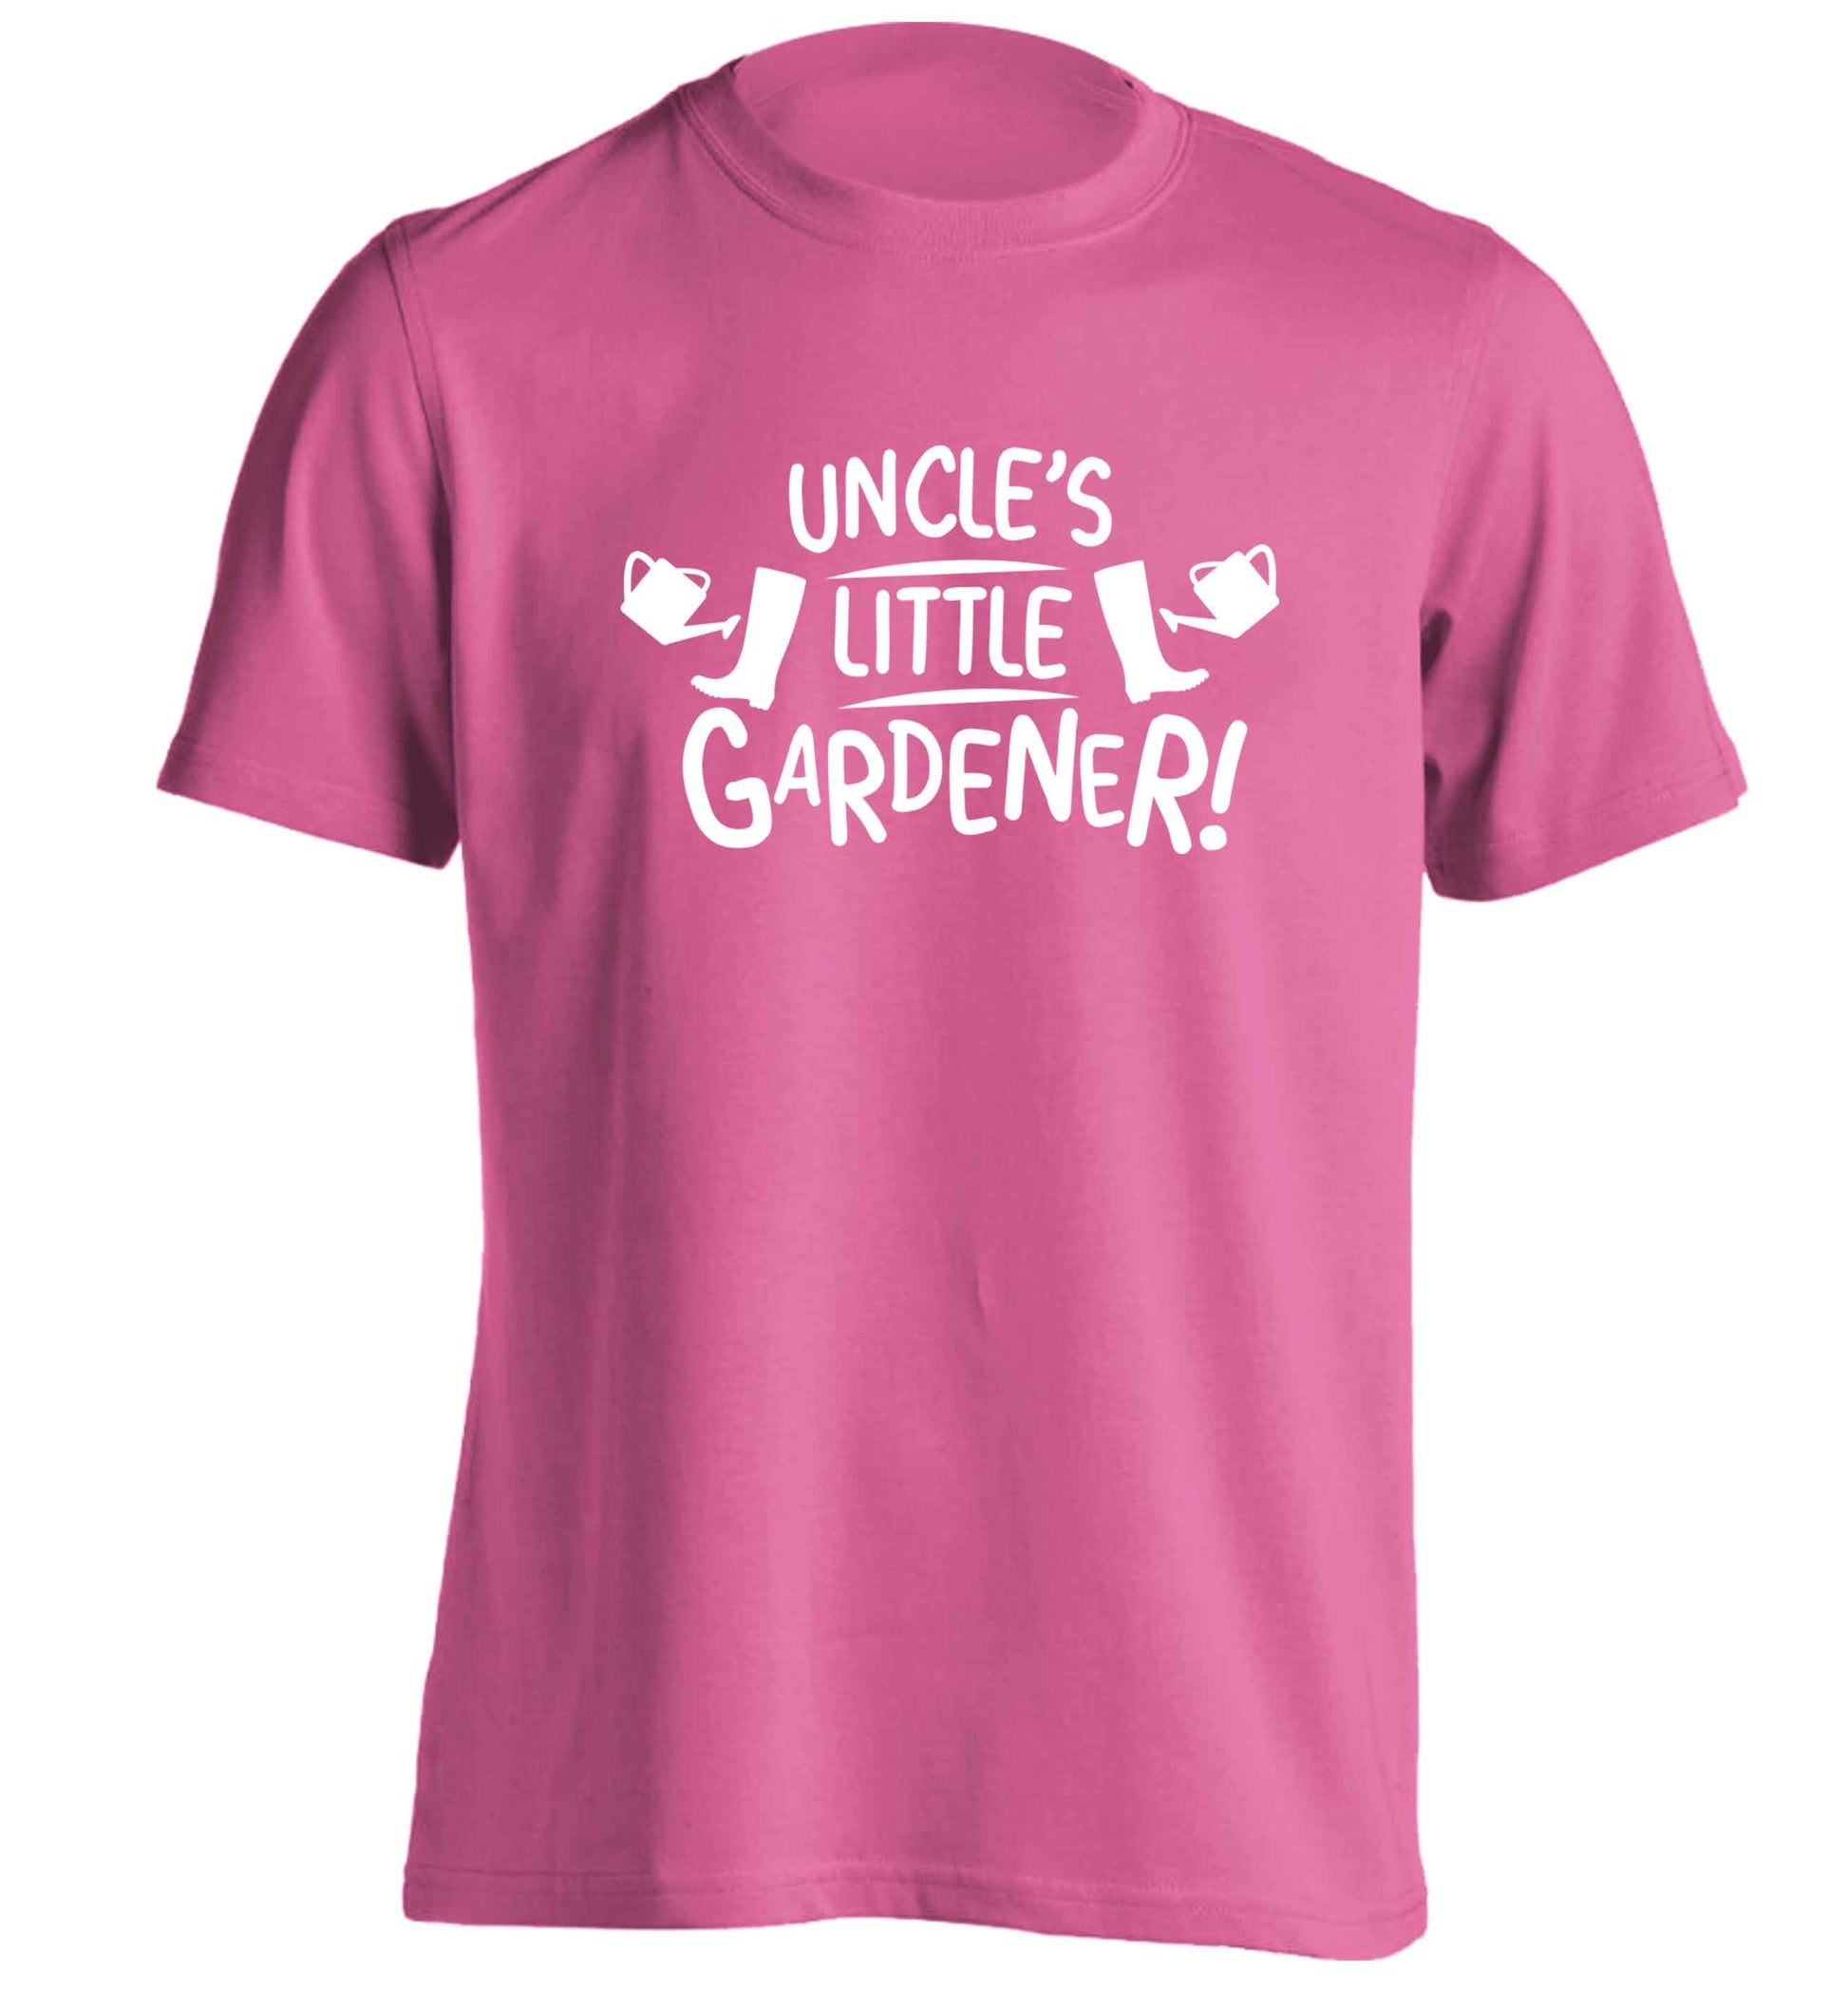 Uncle's little gardener adults unisex pink Tshirt 2XL